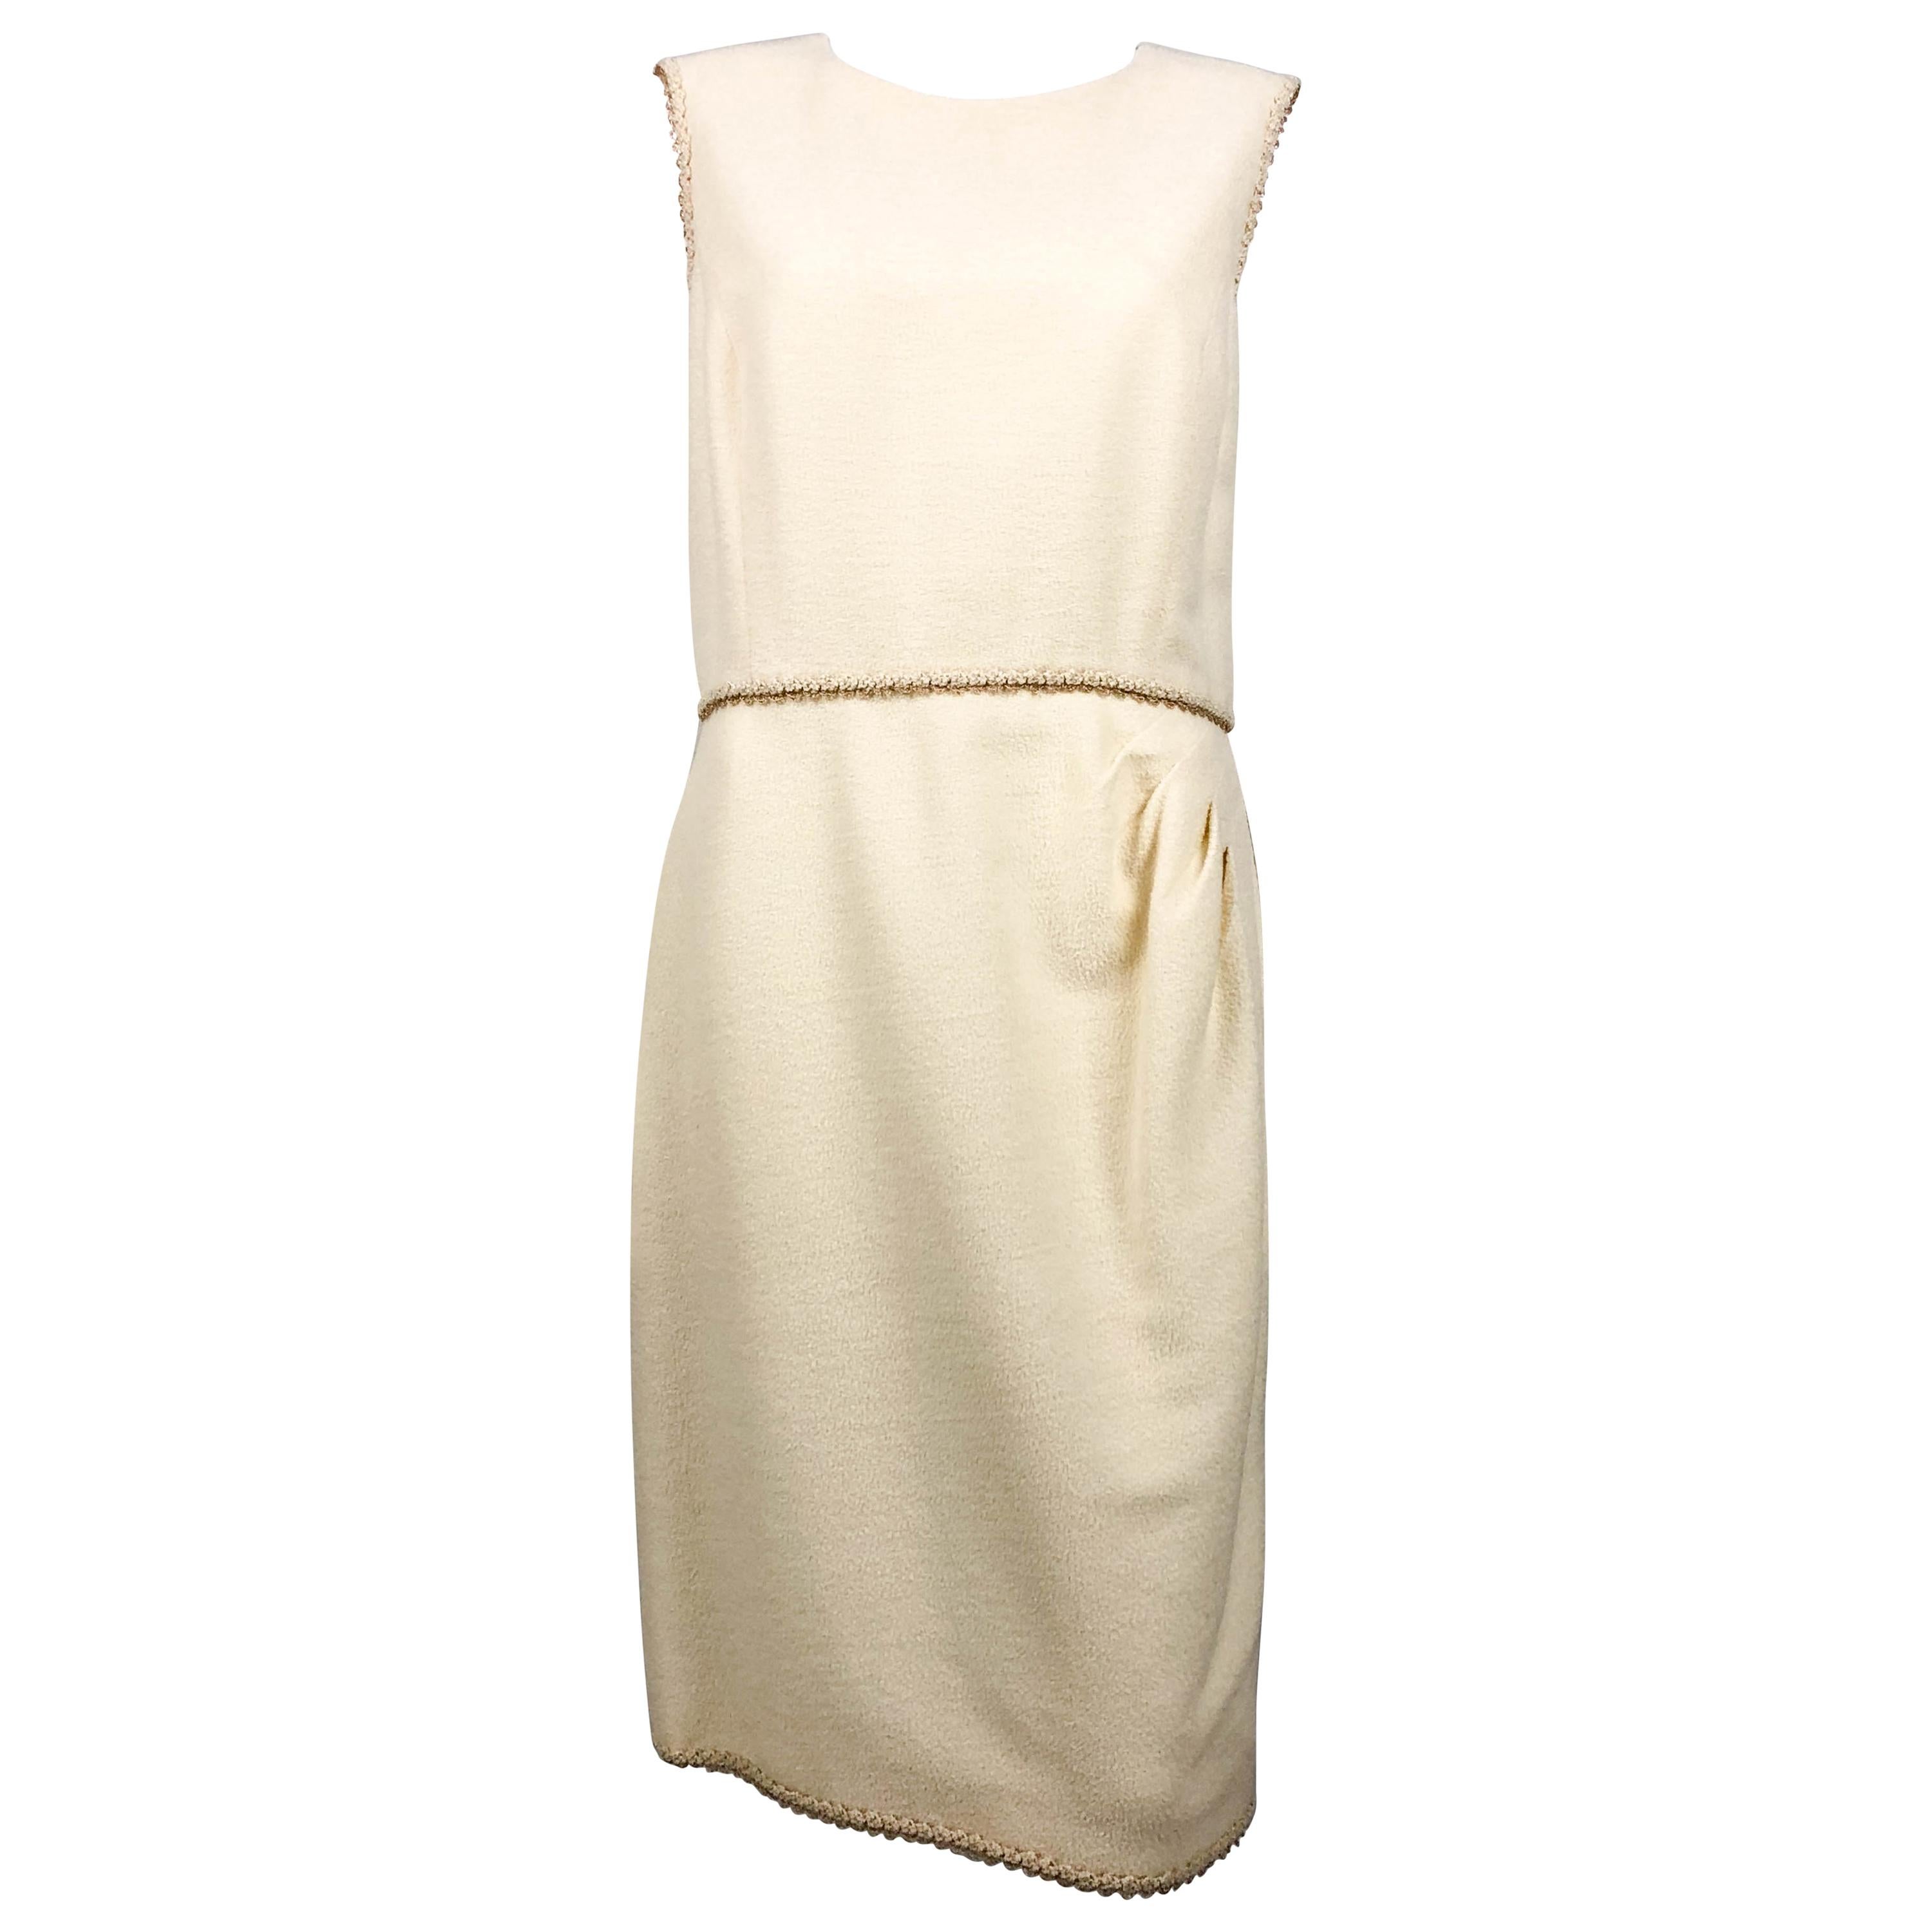 2010 Unworn Chanel Runway Look Cream Dress With Gold Thread Trim For Sale